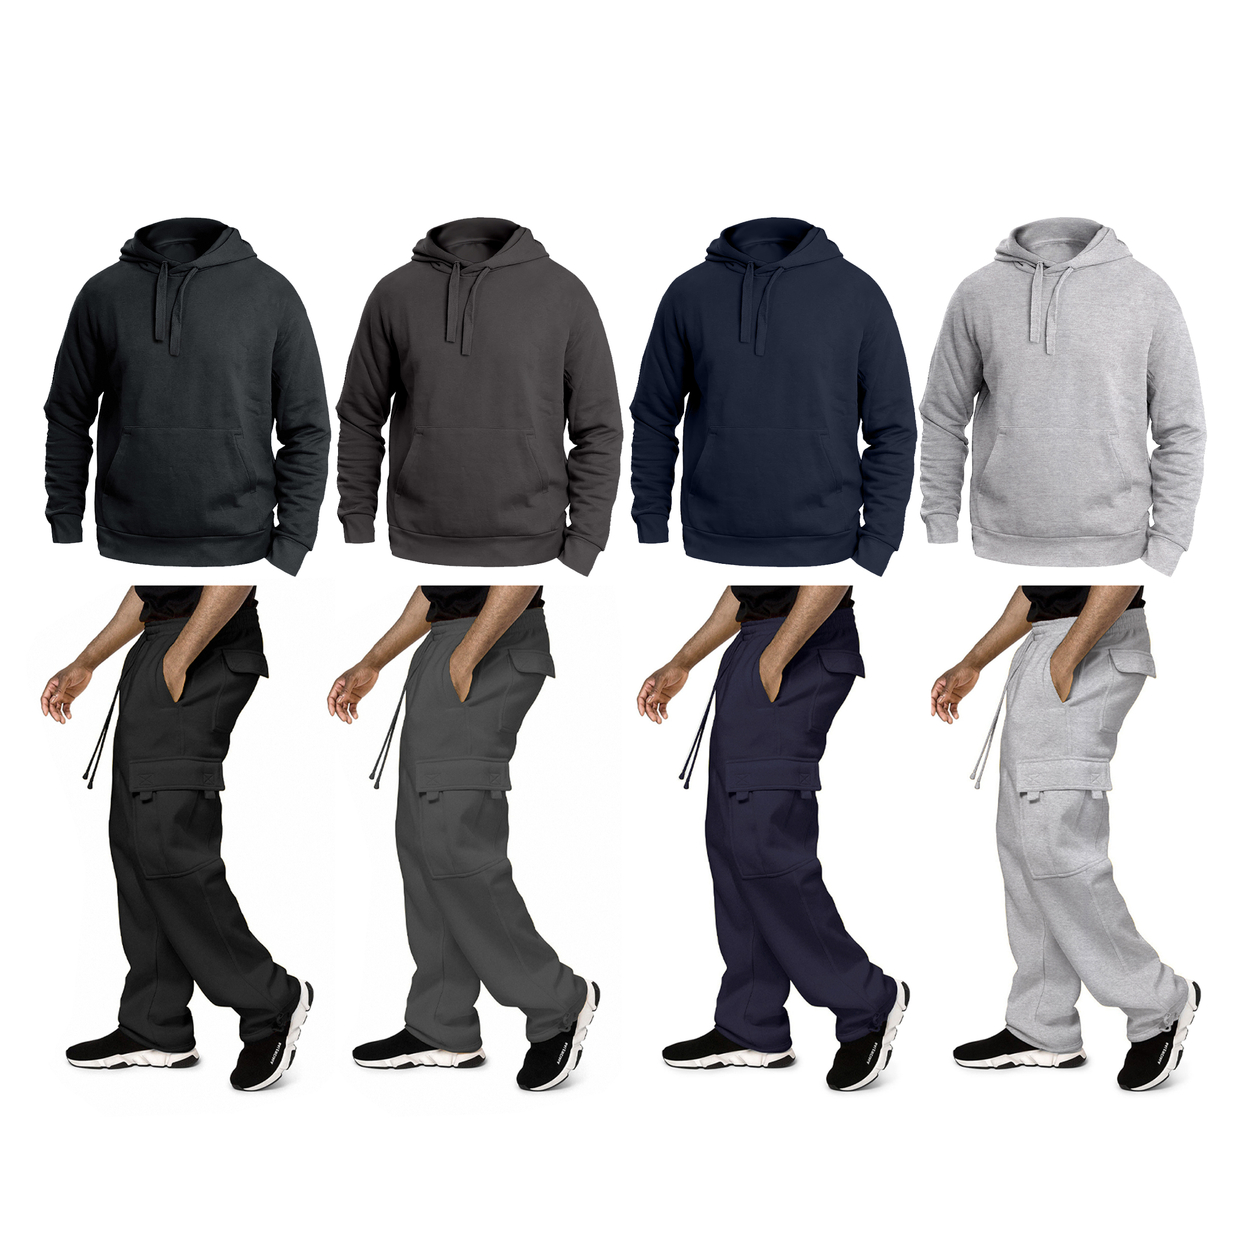 Multi-Pack: Big & Tall Men's Winter Warm Cozy Athletic Fleece Lined Multi-Pocket Cargo Sweatsuit - Navy, 1-pack, 3xl